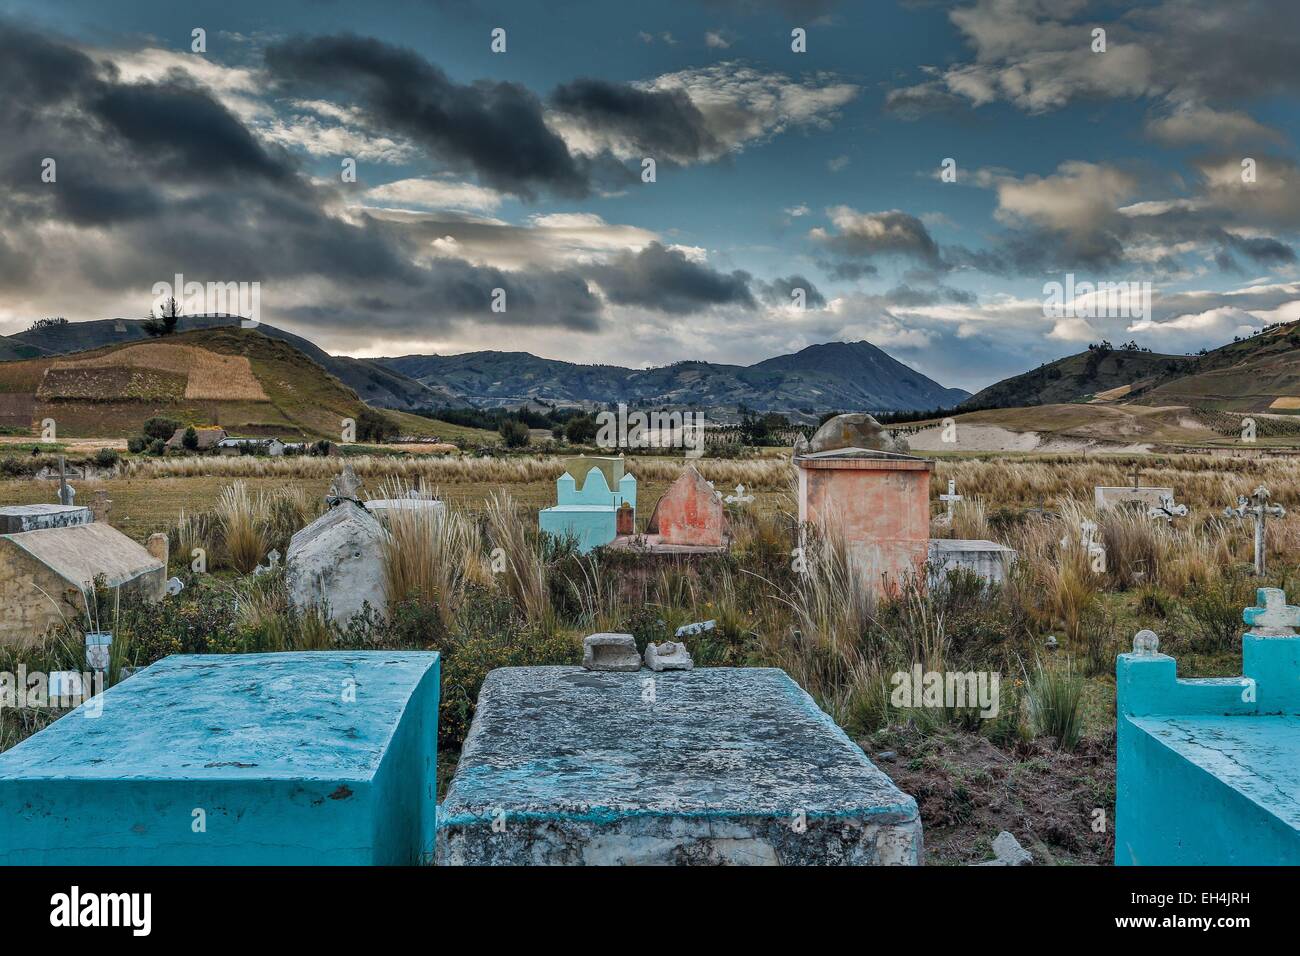 Ecuador, Cotopaxi, Tigua, Andean landscape of a rural cemetery on a plain in a mountainous setting under a stormy sky Stock Photo